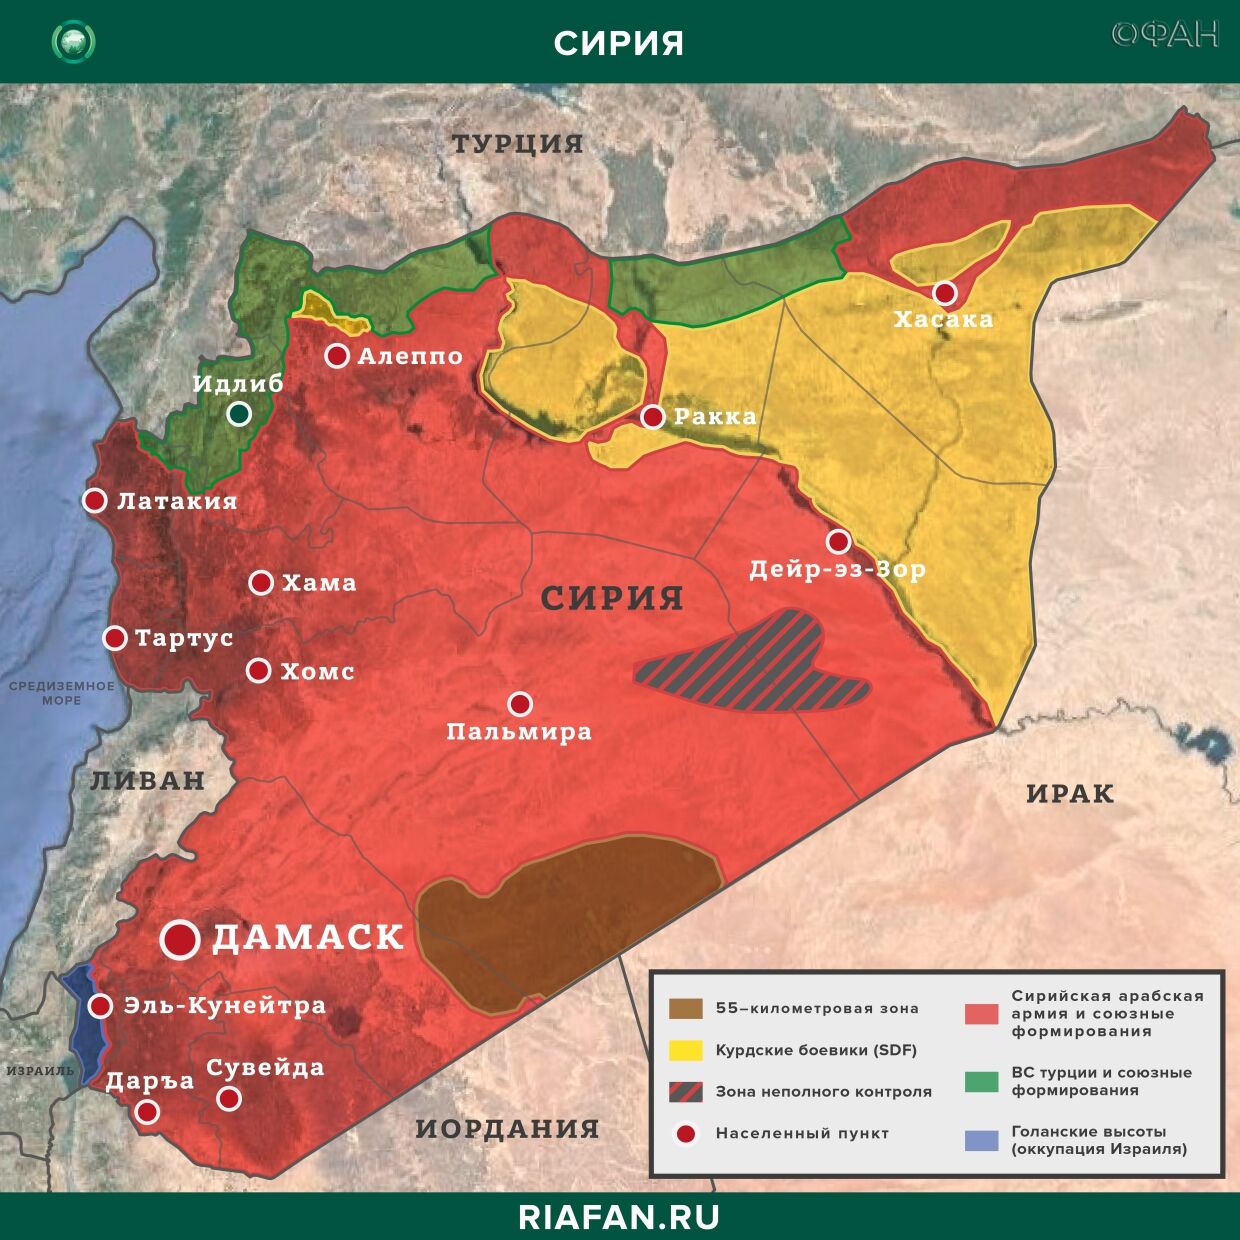 Syrie résultats quotidiens pour 26 Avril 06.00: США создают группировку для удержания контроля над нефтью, атака на штаб ХТШ в Идлибе